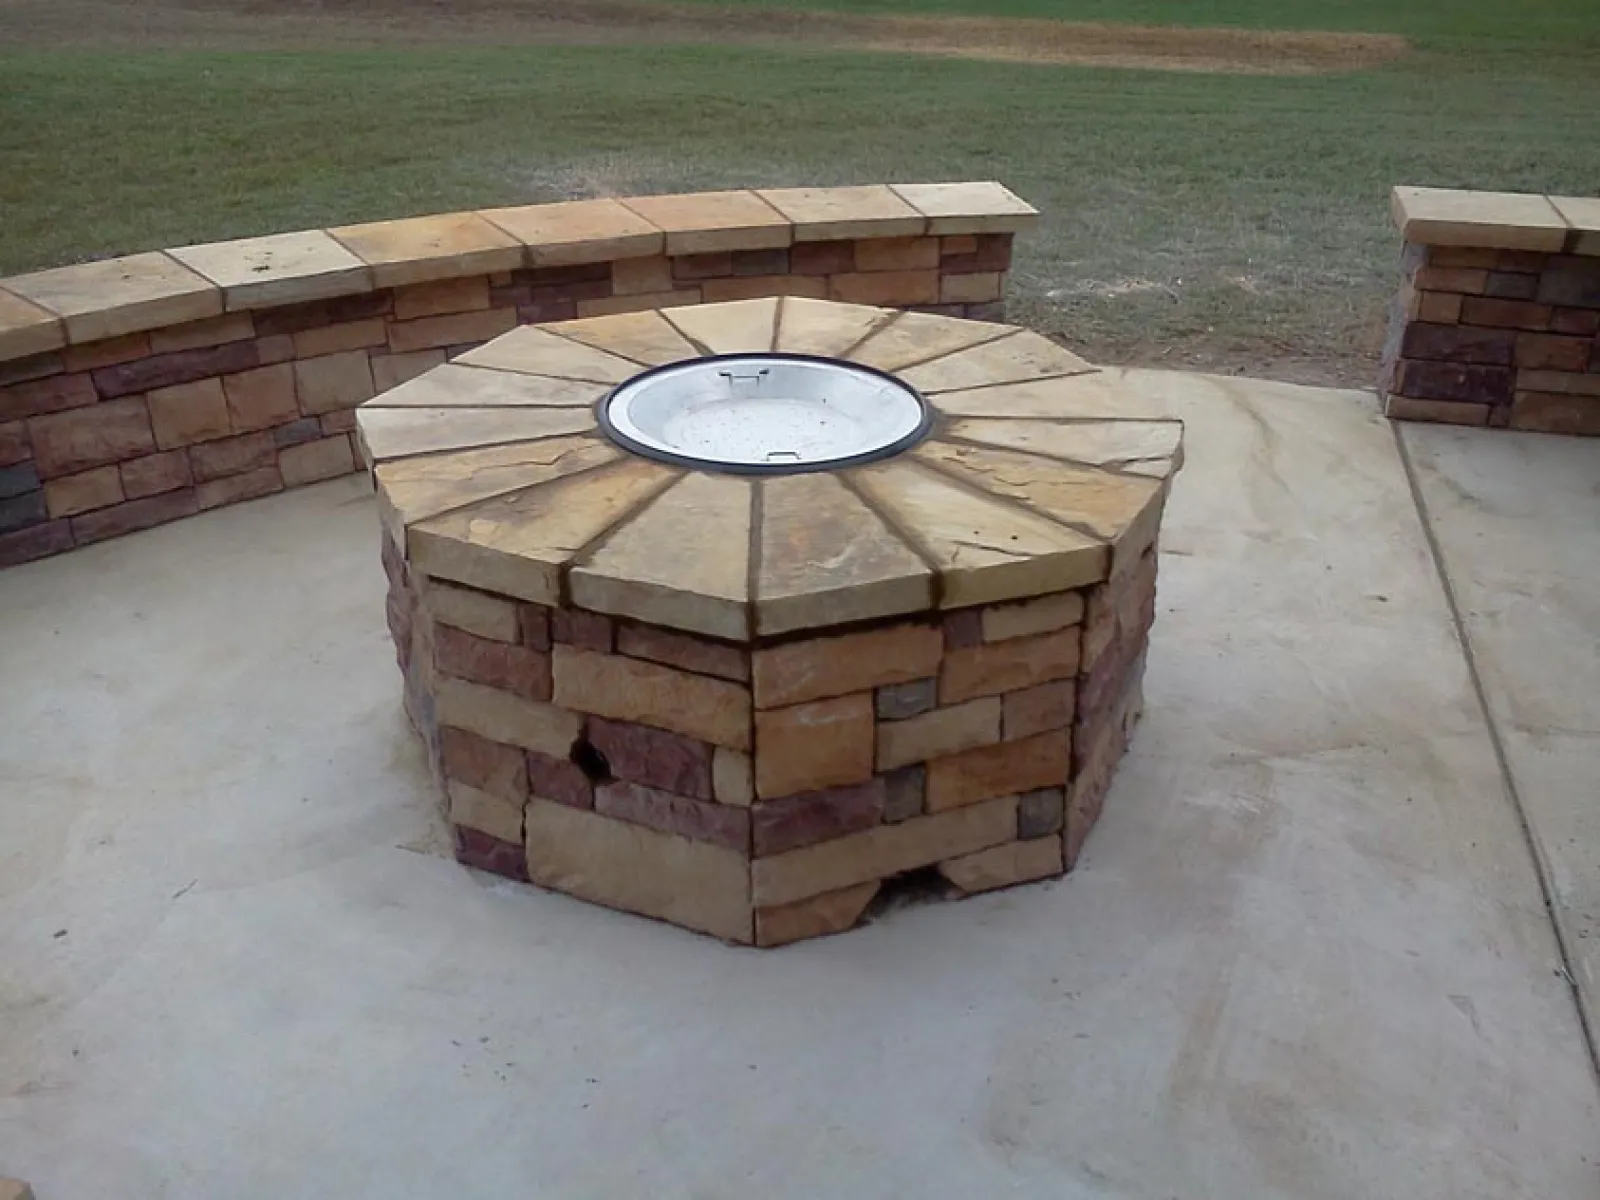 a brick oven on a brick patio